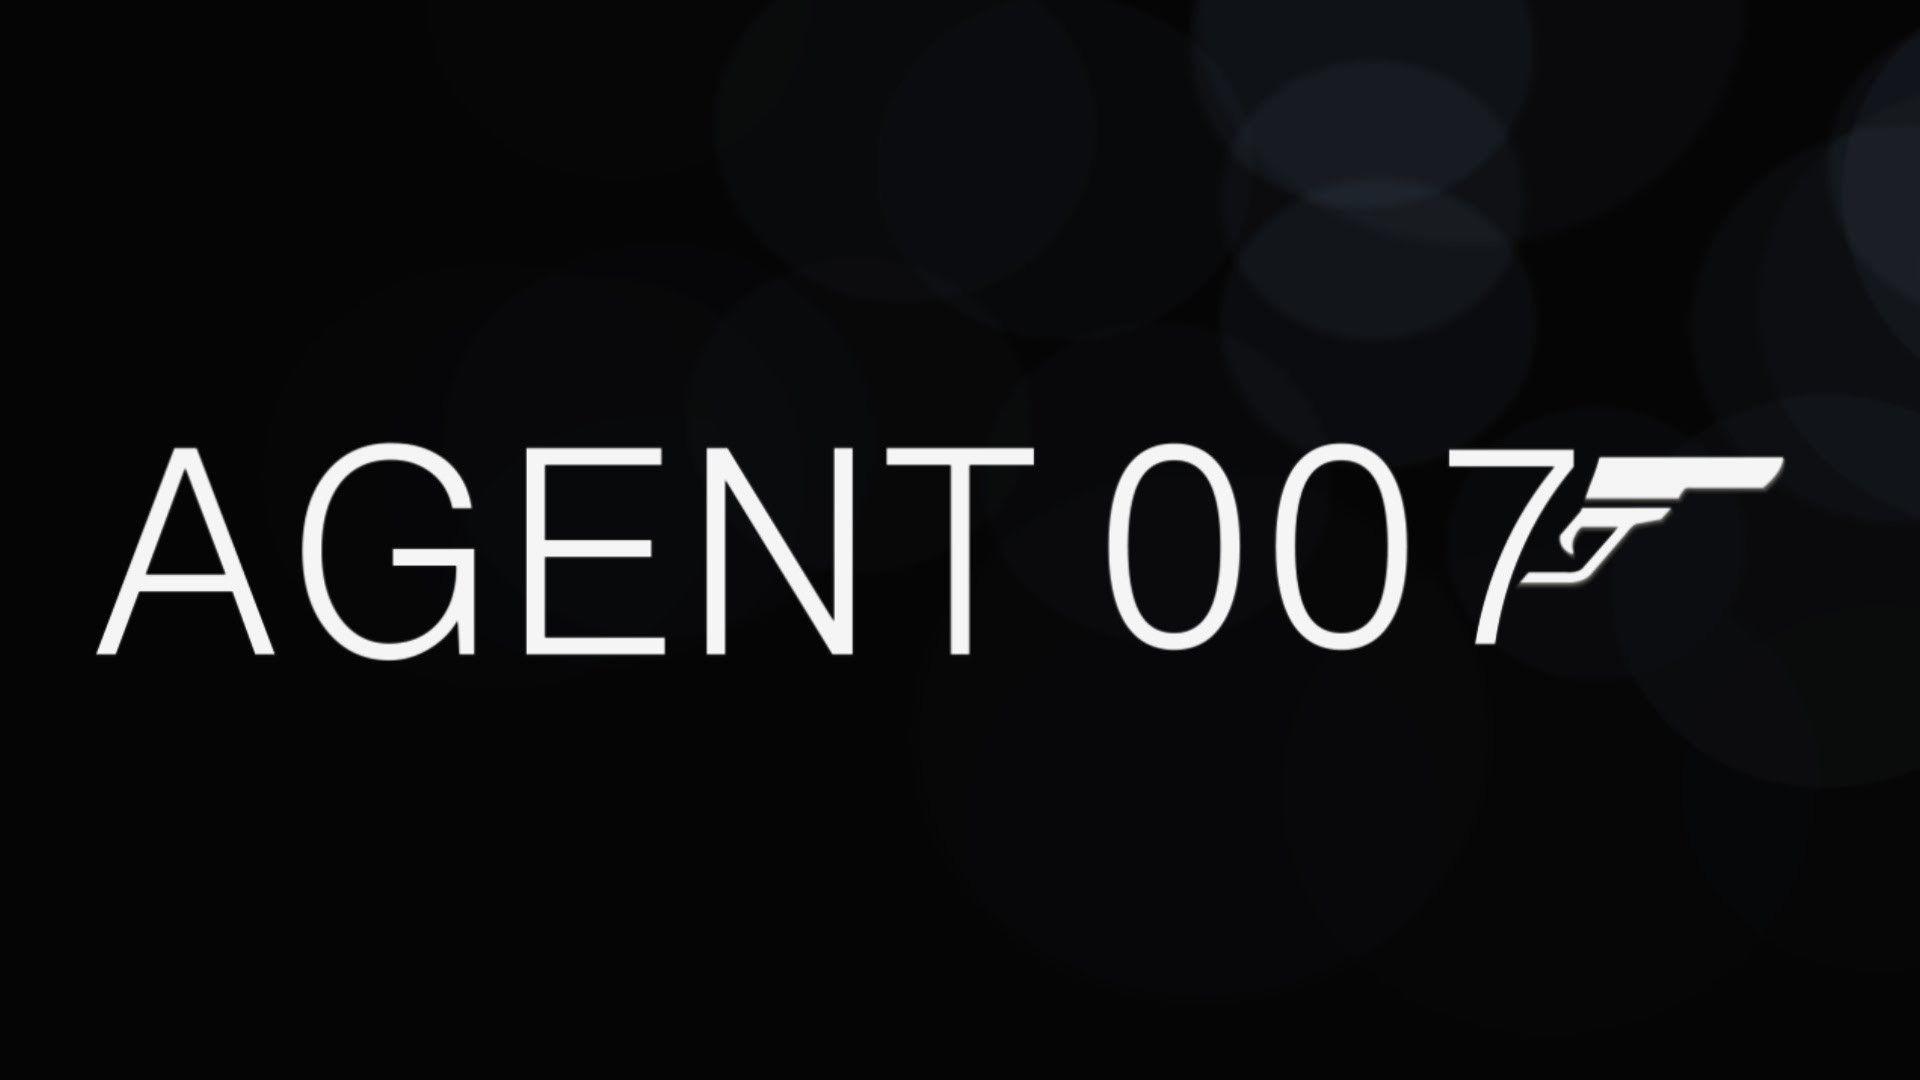 OO7 Logo - 007 Logo Wallpaper (70+ images)